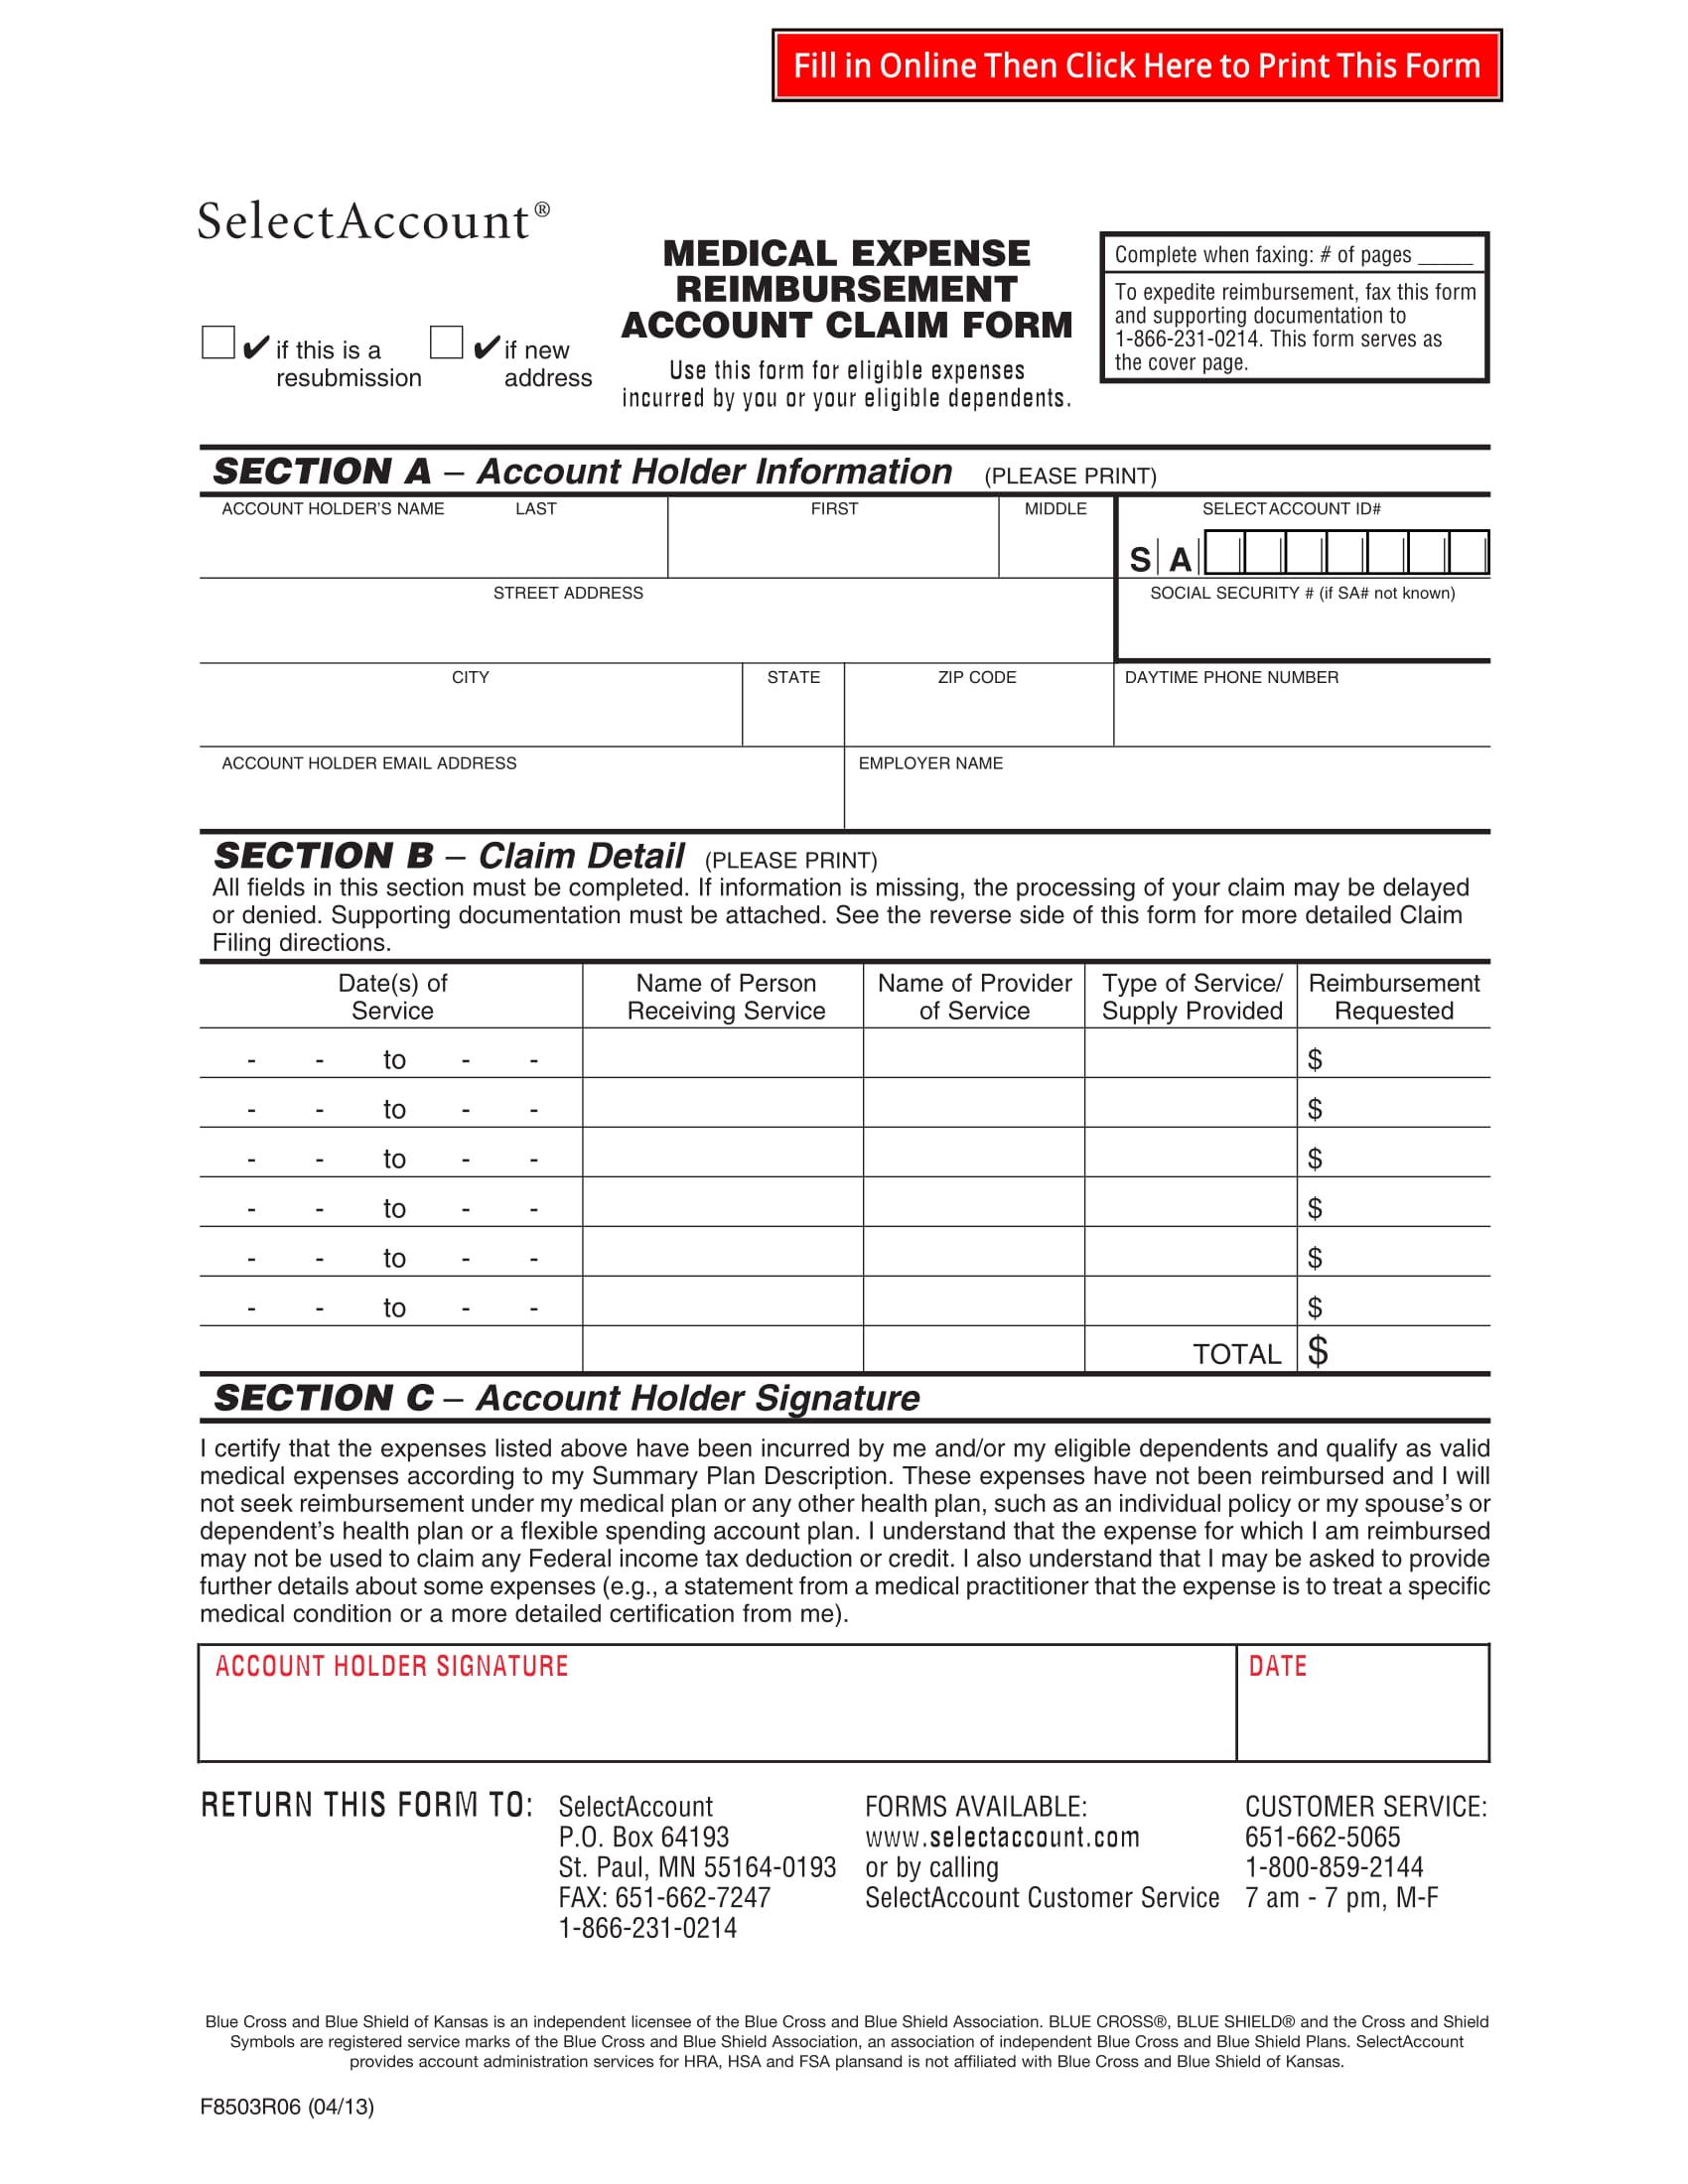 FREE 14 Employee Medical Reimbursement Forms In PDF